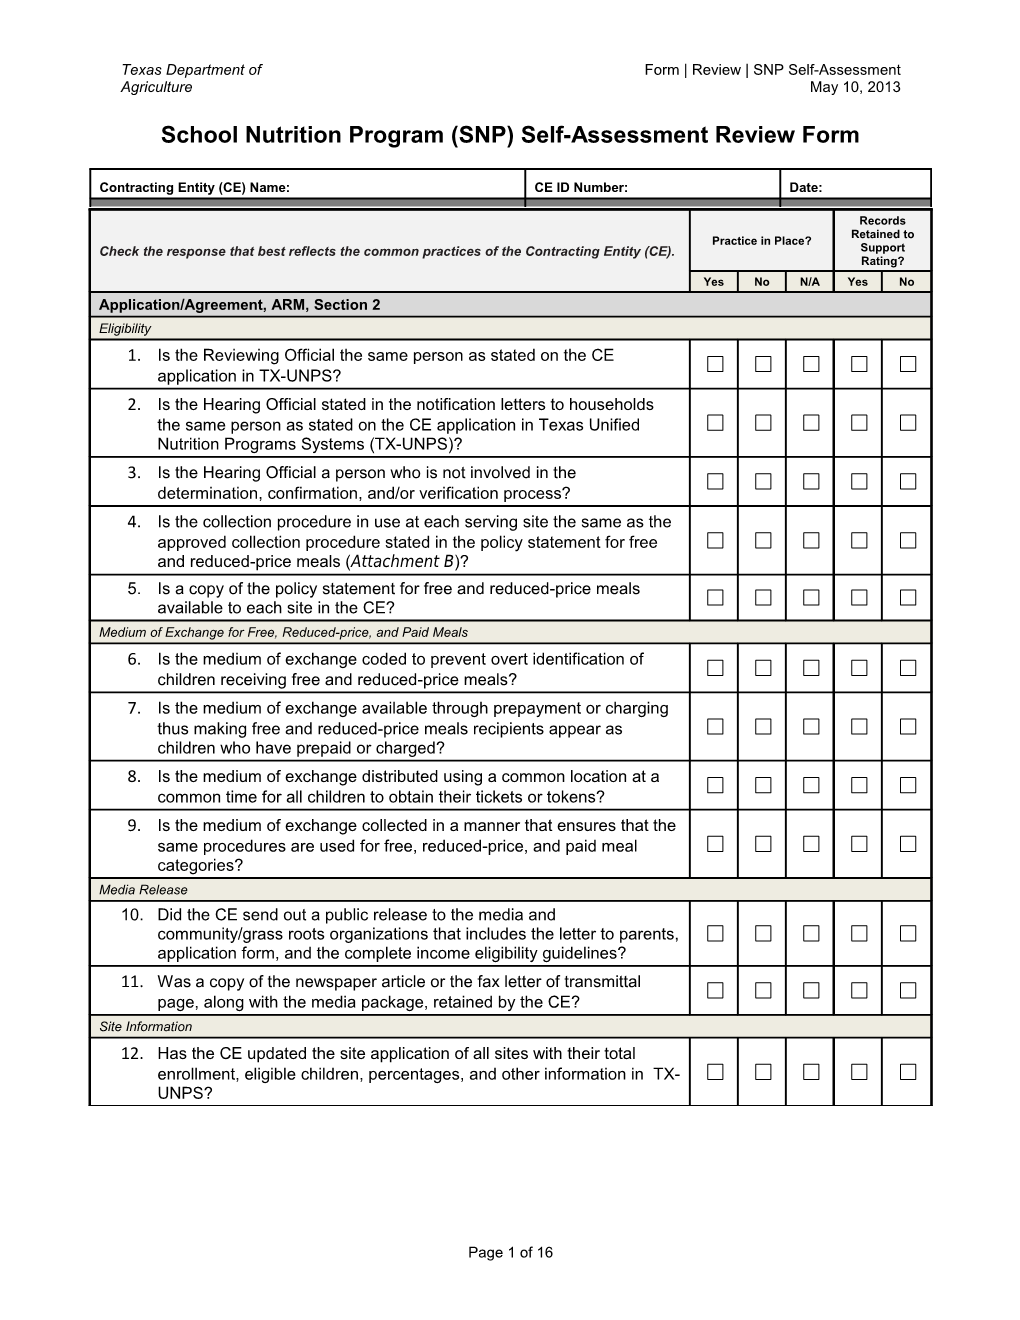 School Nutrition Program (SNP) Self-Assessment Review Form